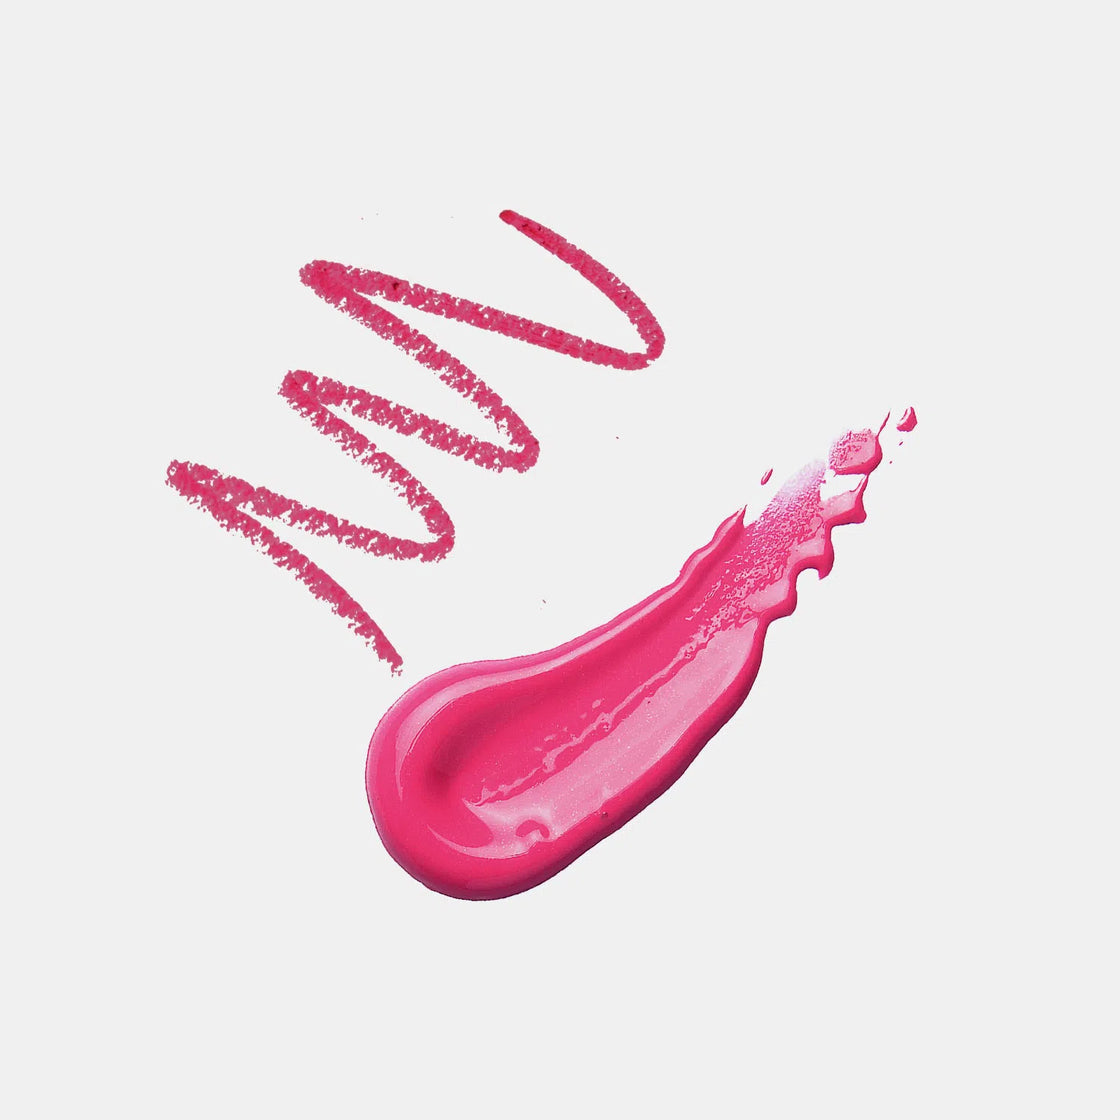 Kiss Me Pink - 2PC Lip Kit-cruelty free cosmetics-Sunny Leone